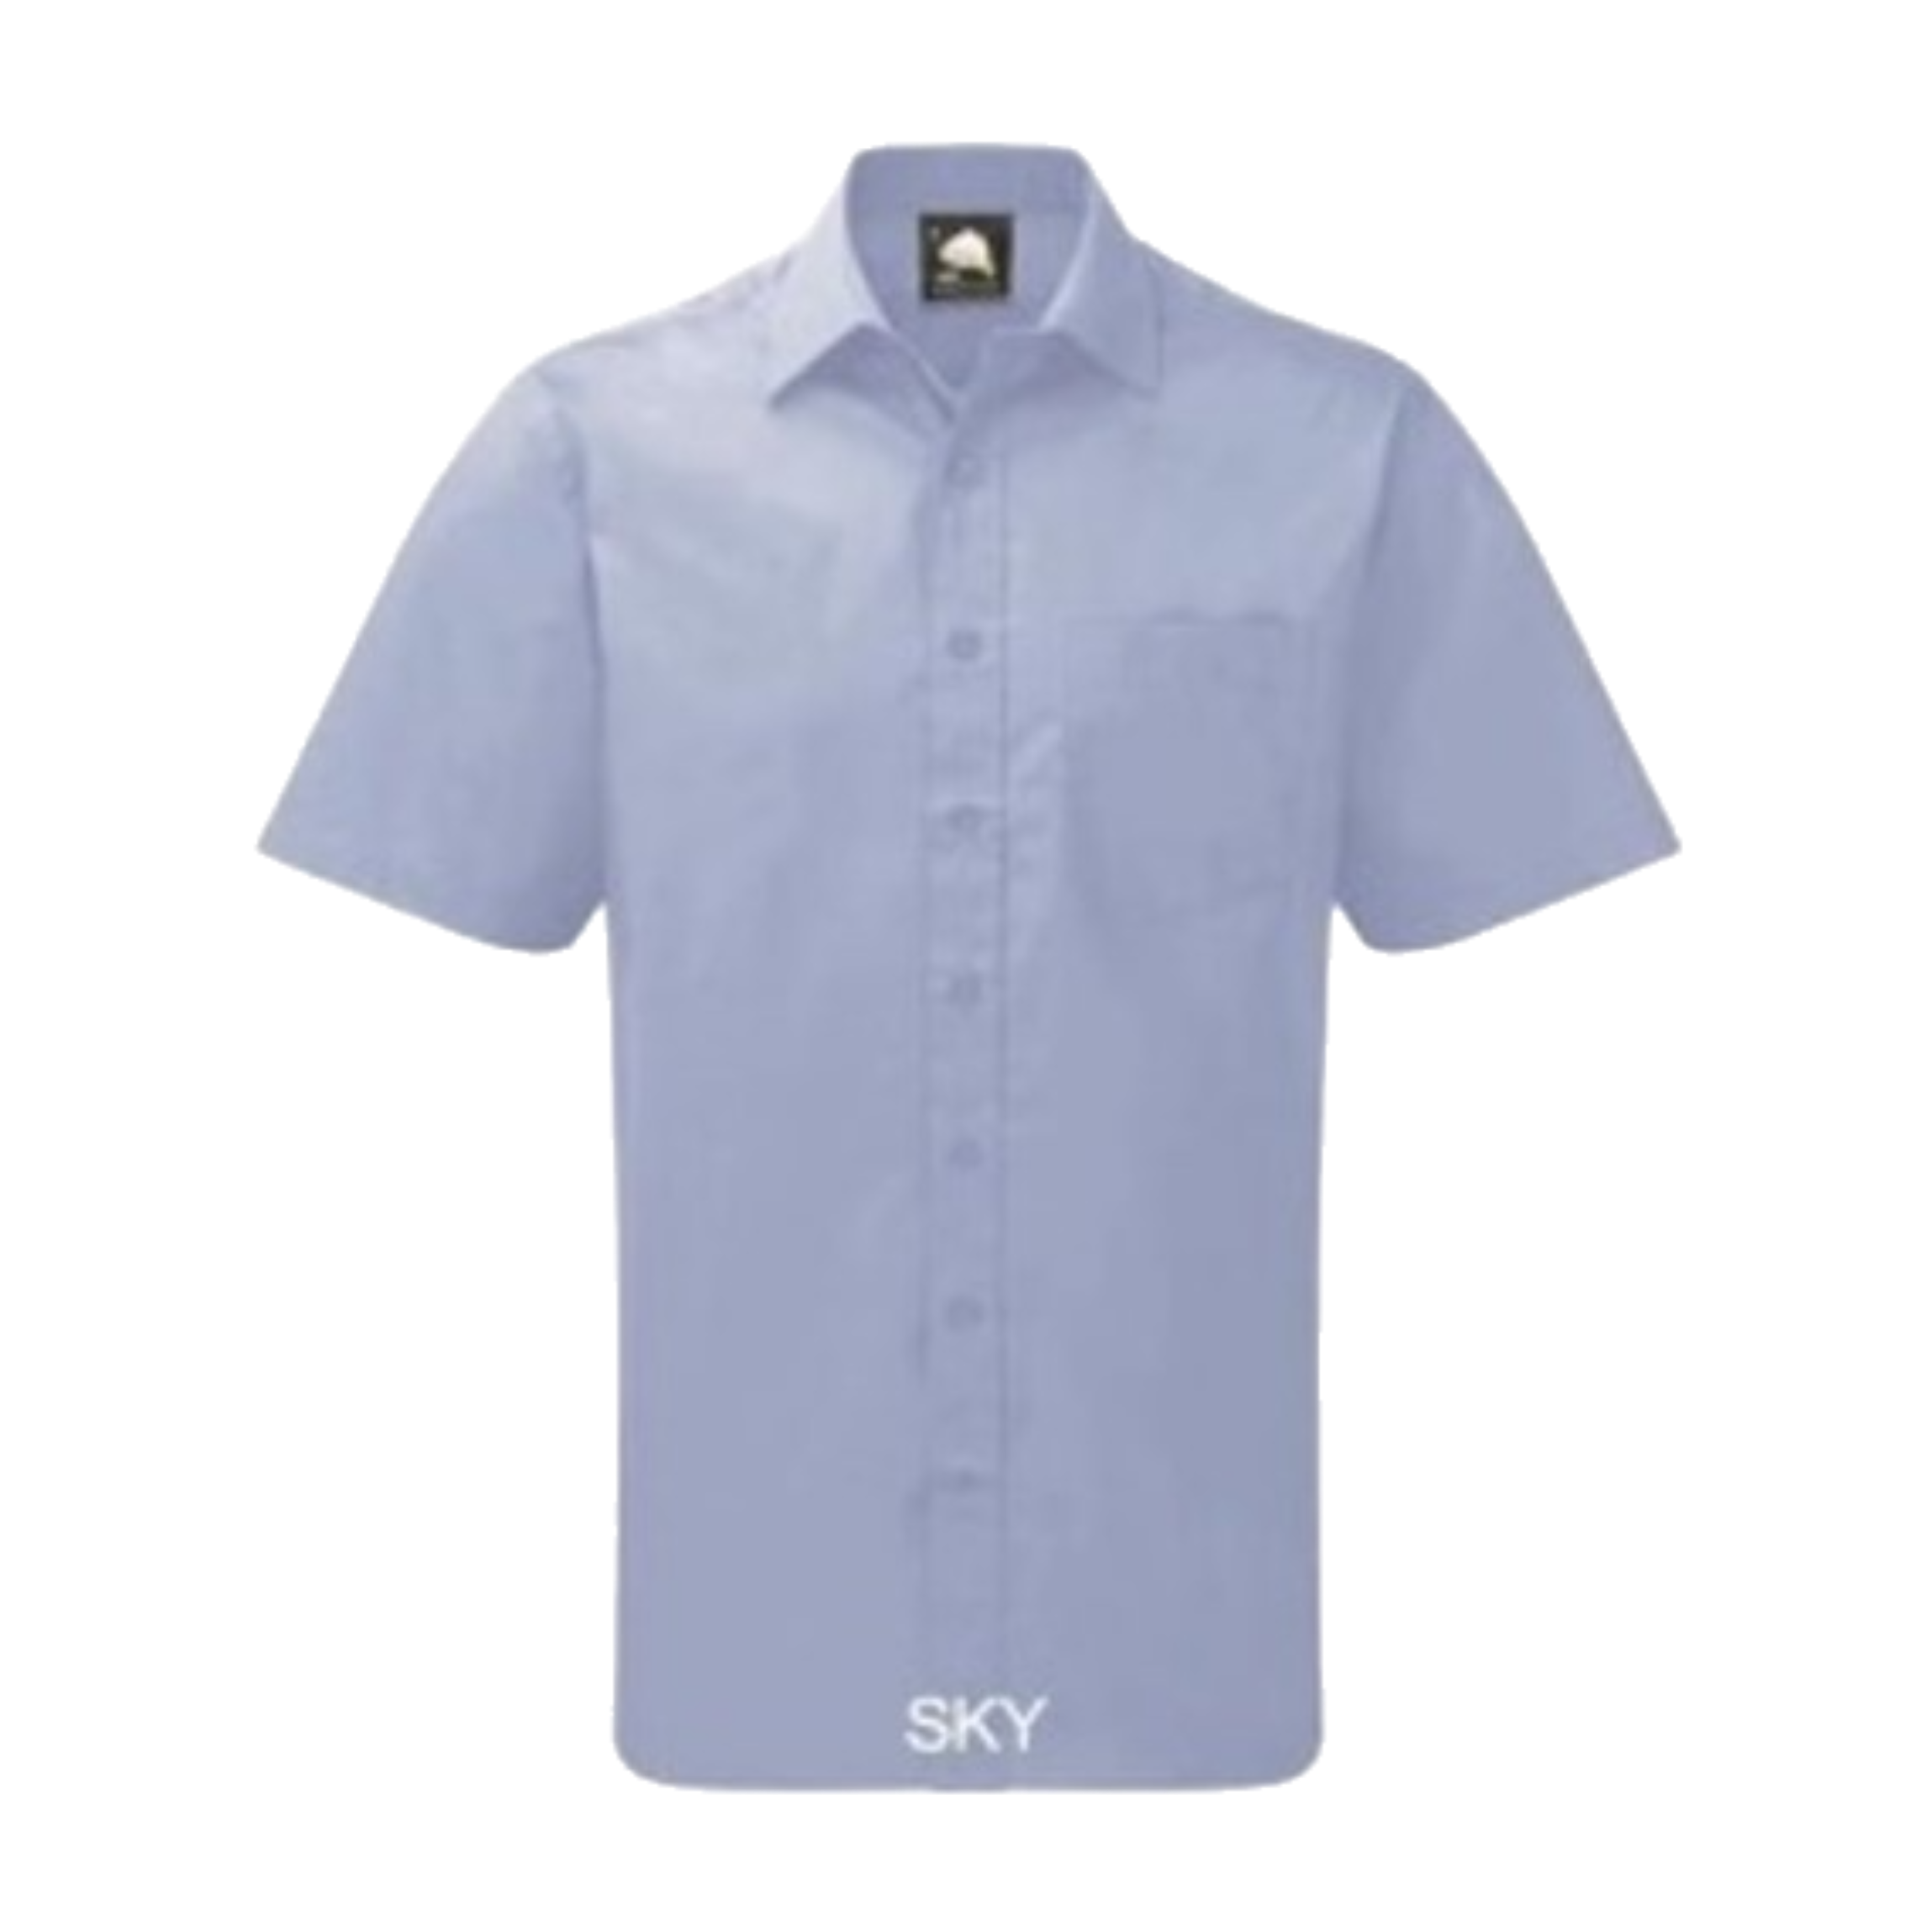 Orn Premium Oxford Short Sleeve Shirt - Sky Blue - 15.5in - TJ Hughes